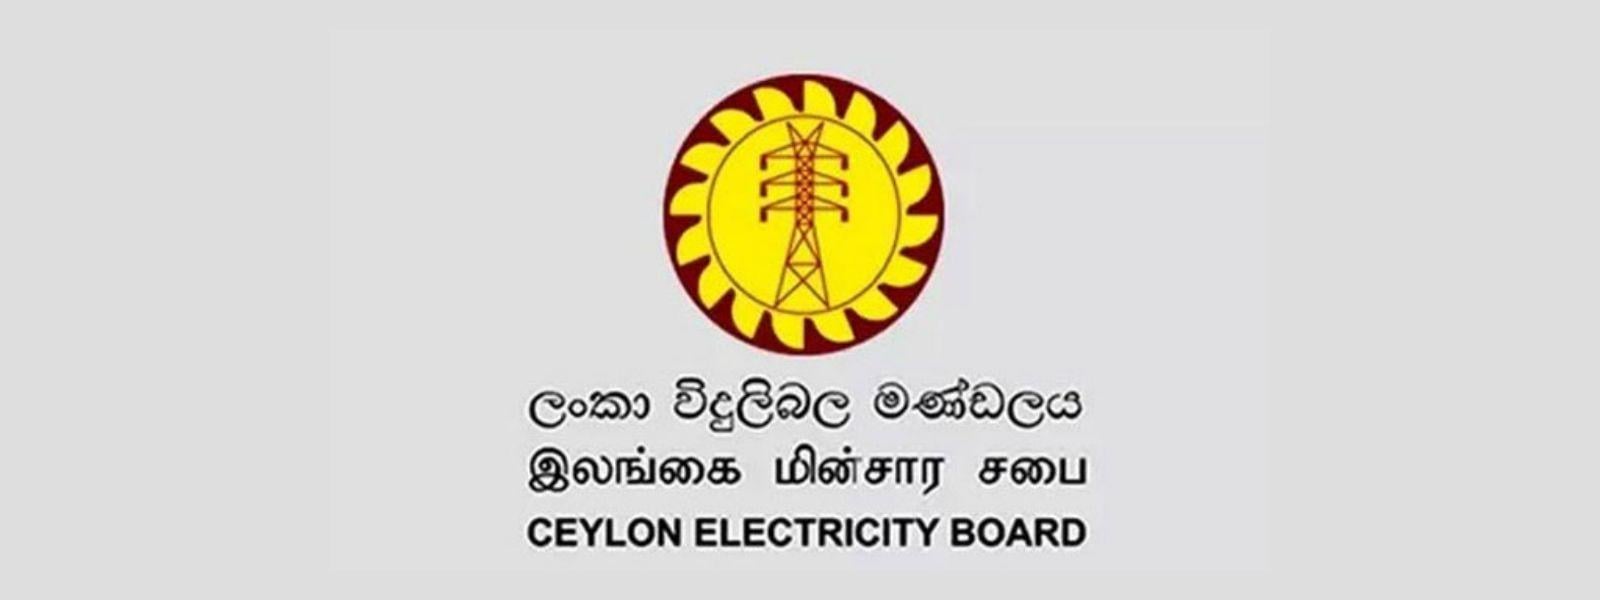 CEB Logo - CEB requests public to inform authorities of power failures - Sri ...